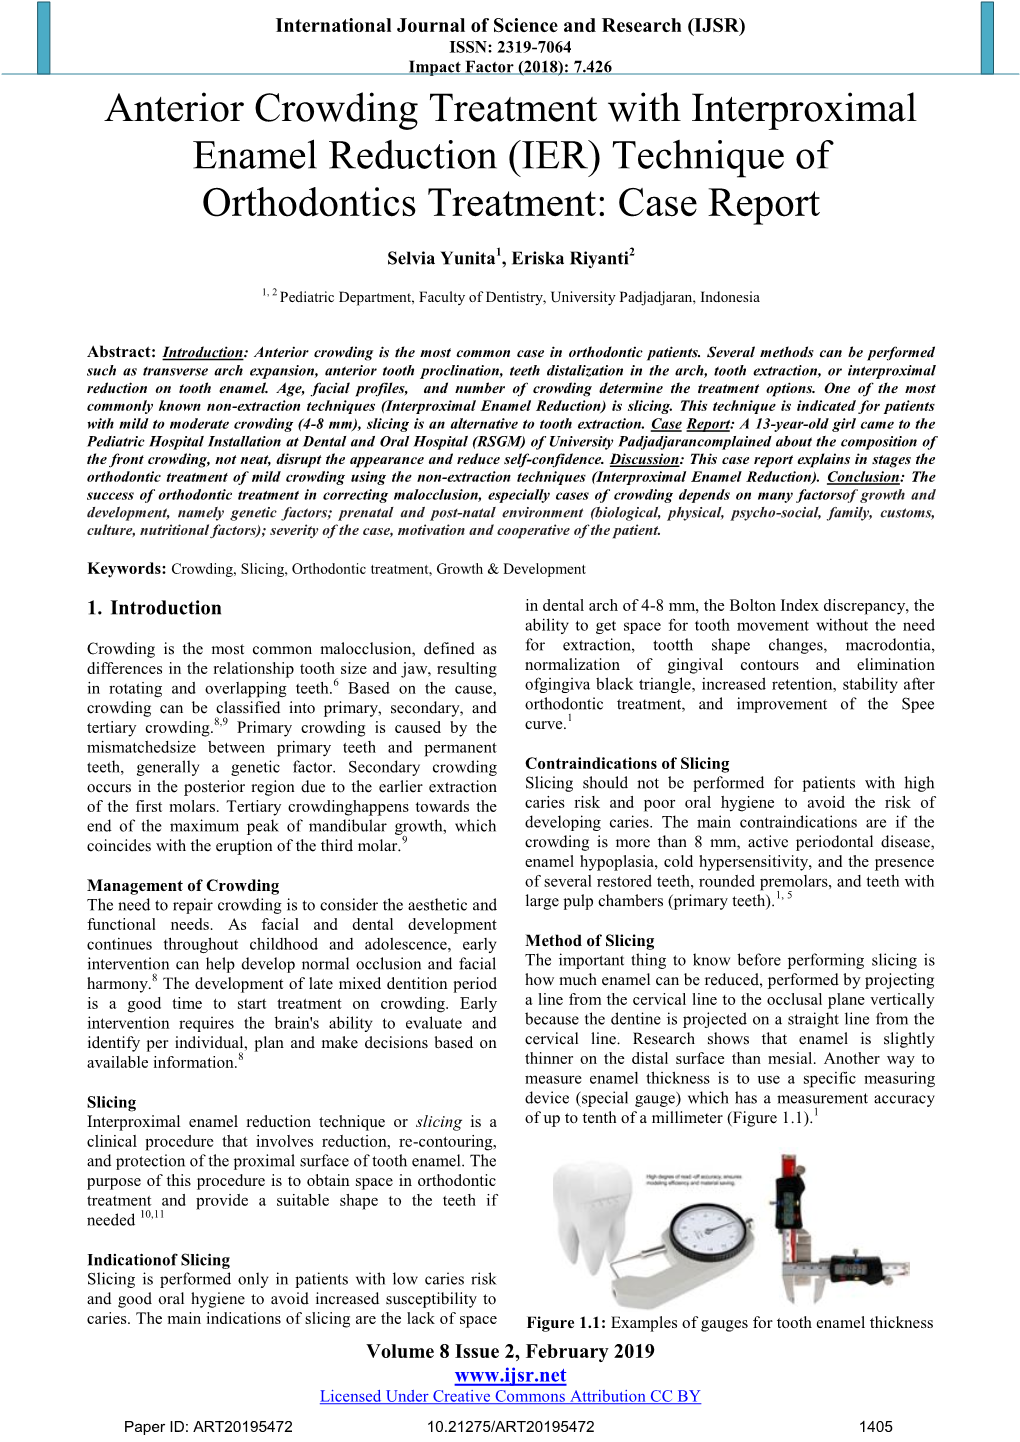 Anterior Crowding Treatment with Interproximal Enamel Reduction (IER) Technique of Orthodontics Treatment: Case Report